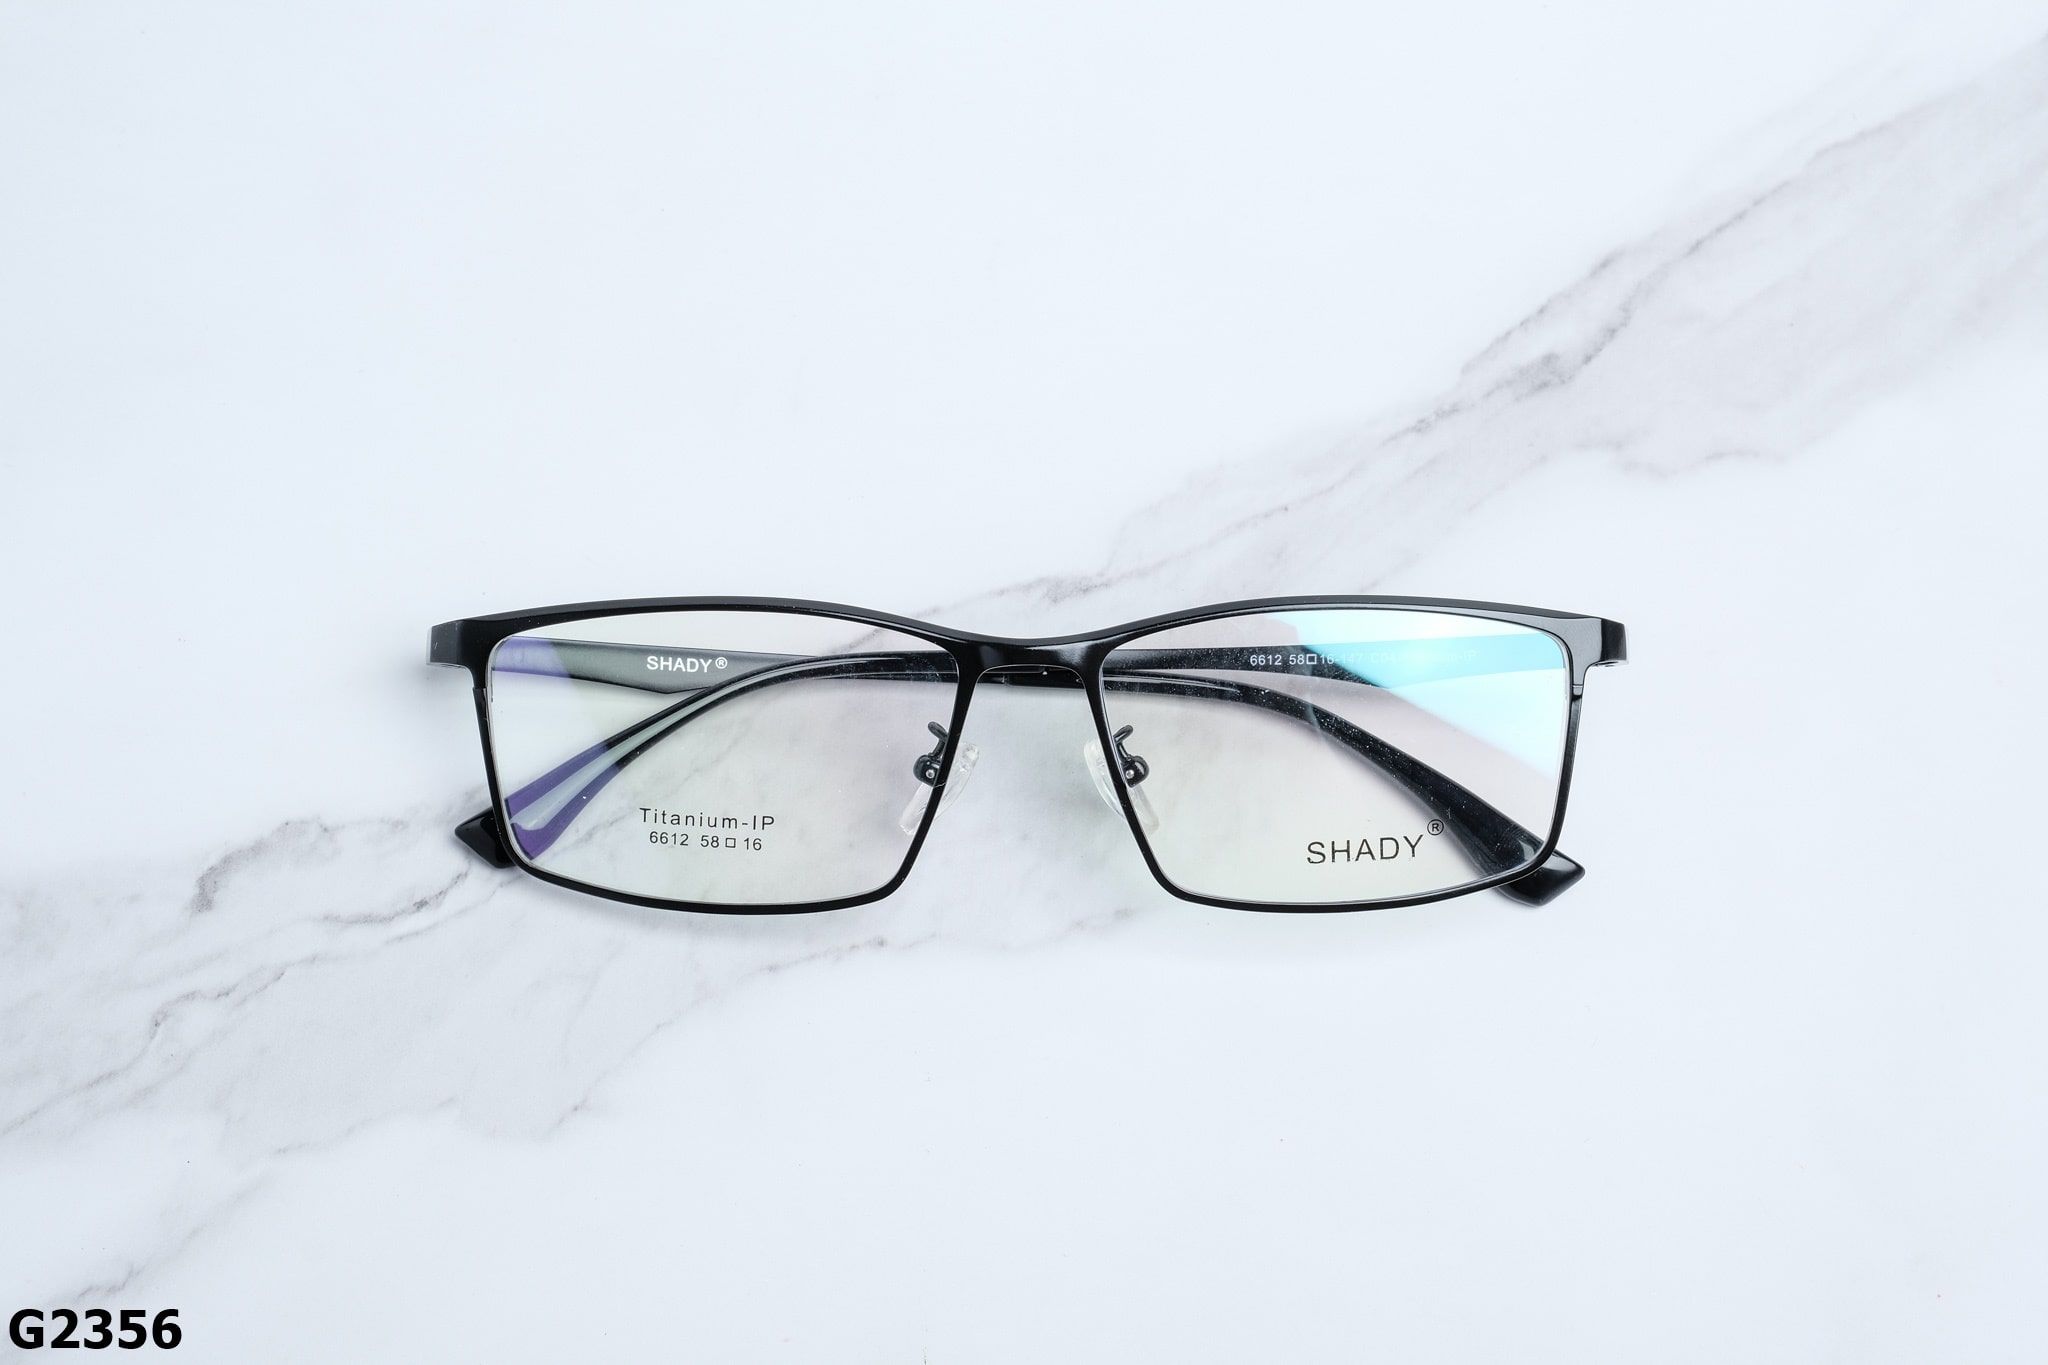  SHADY Eyewear - Glasses - G2356 